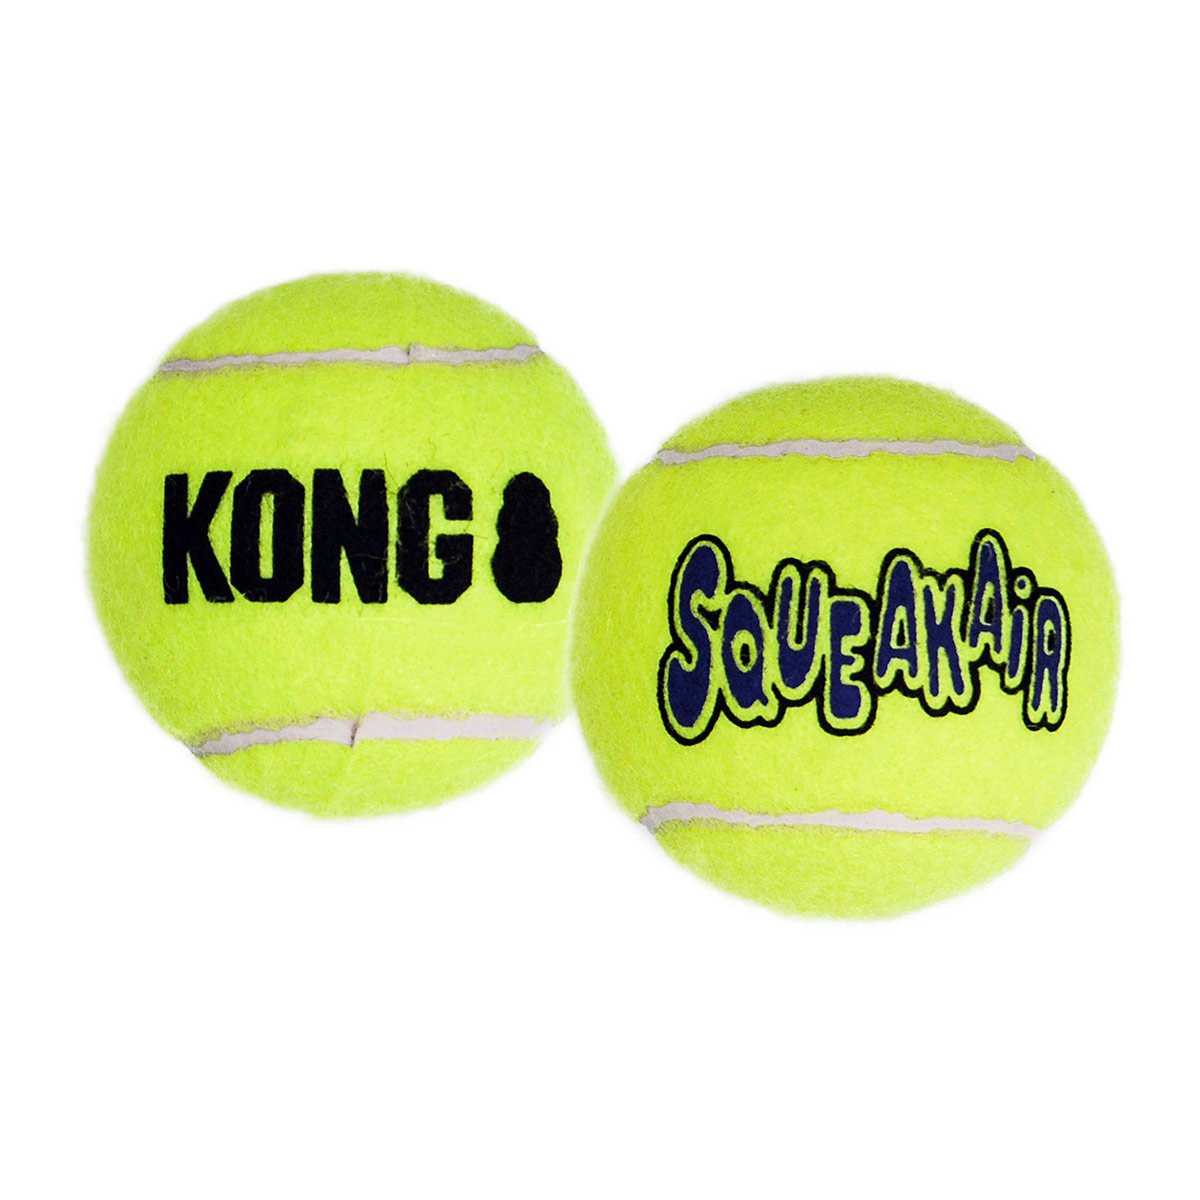 KONG AirDog Squeakair míček, 3 kusy S